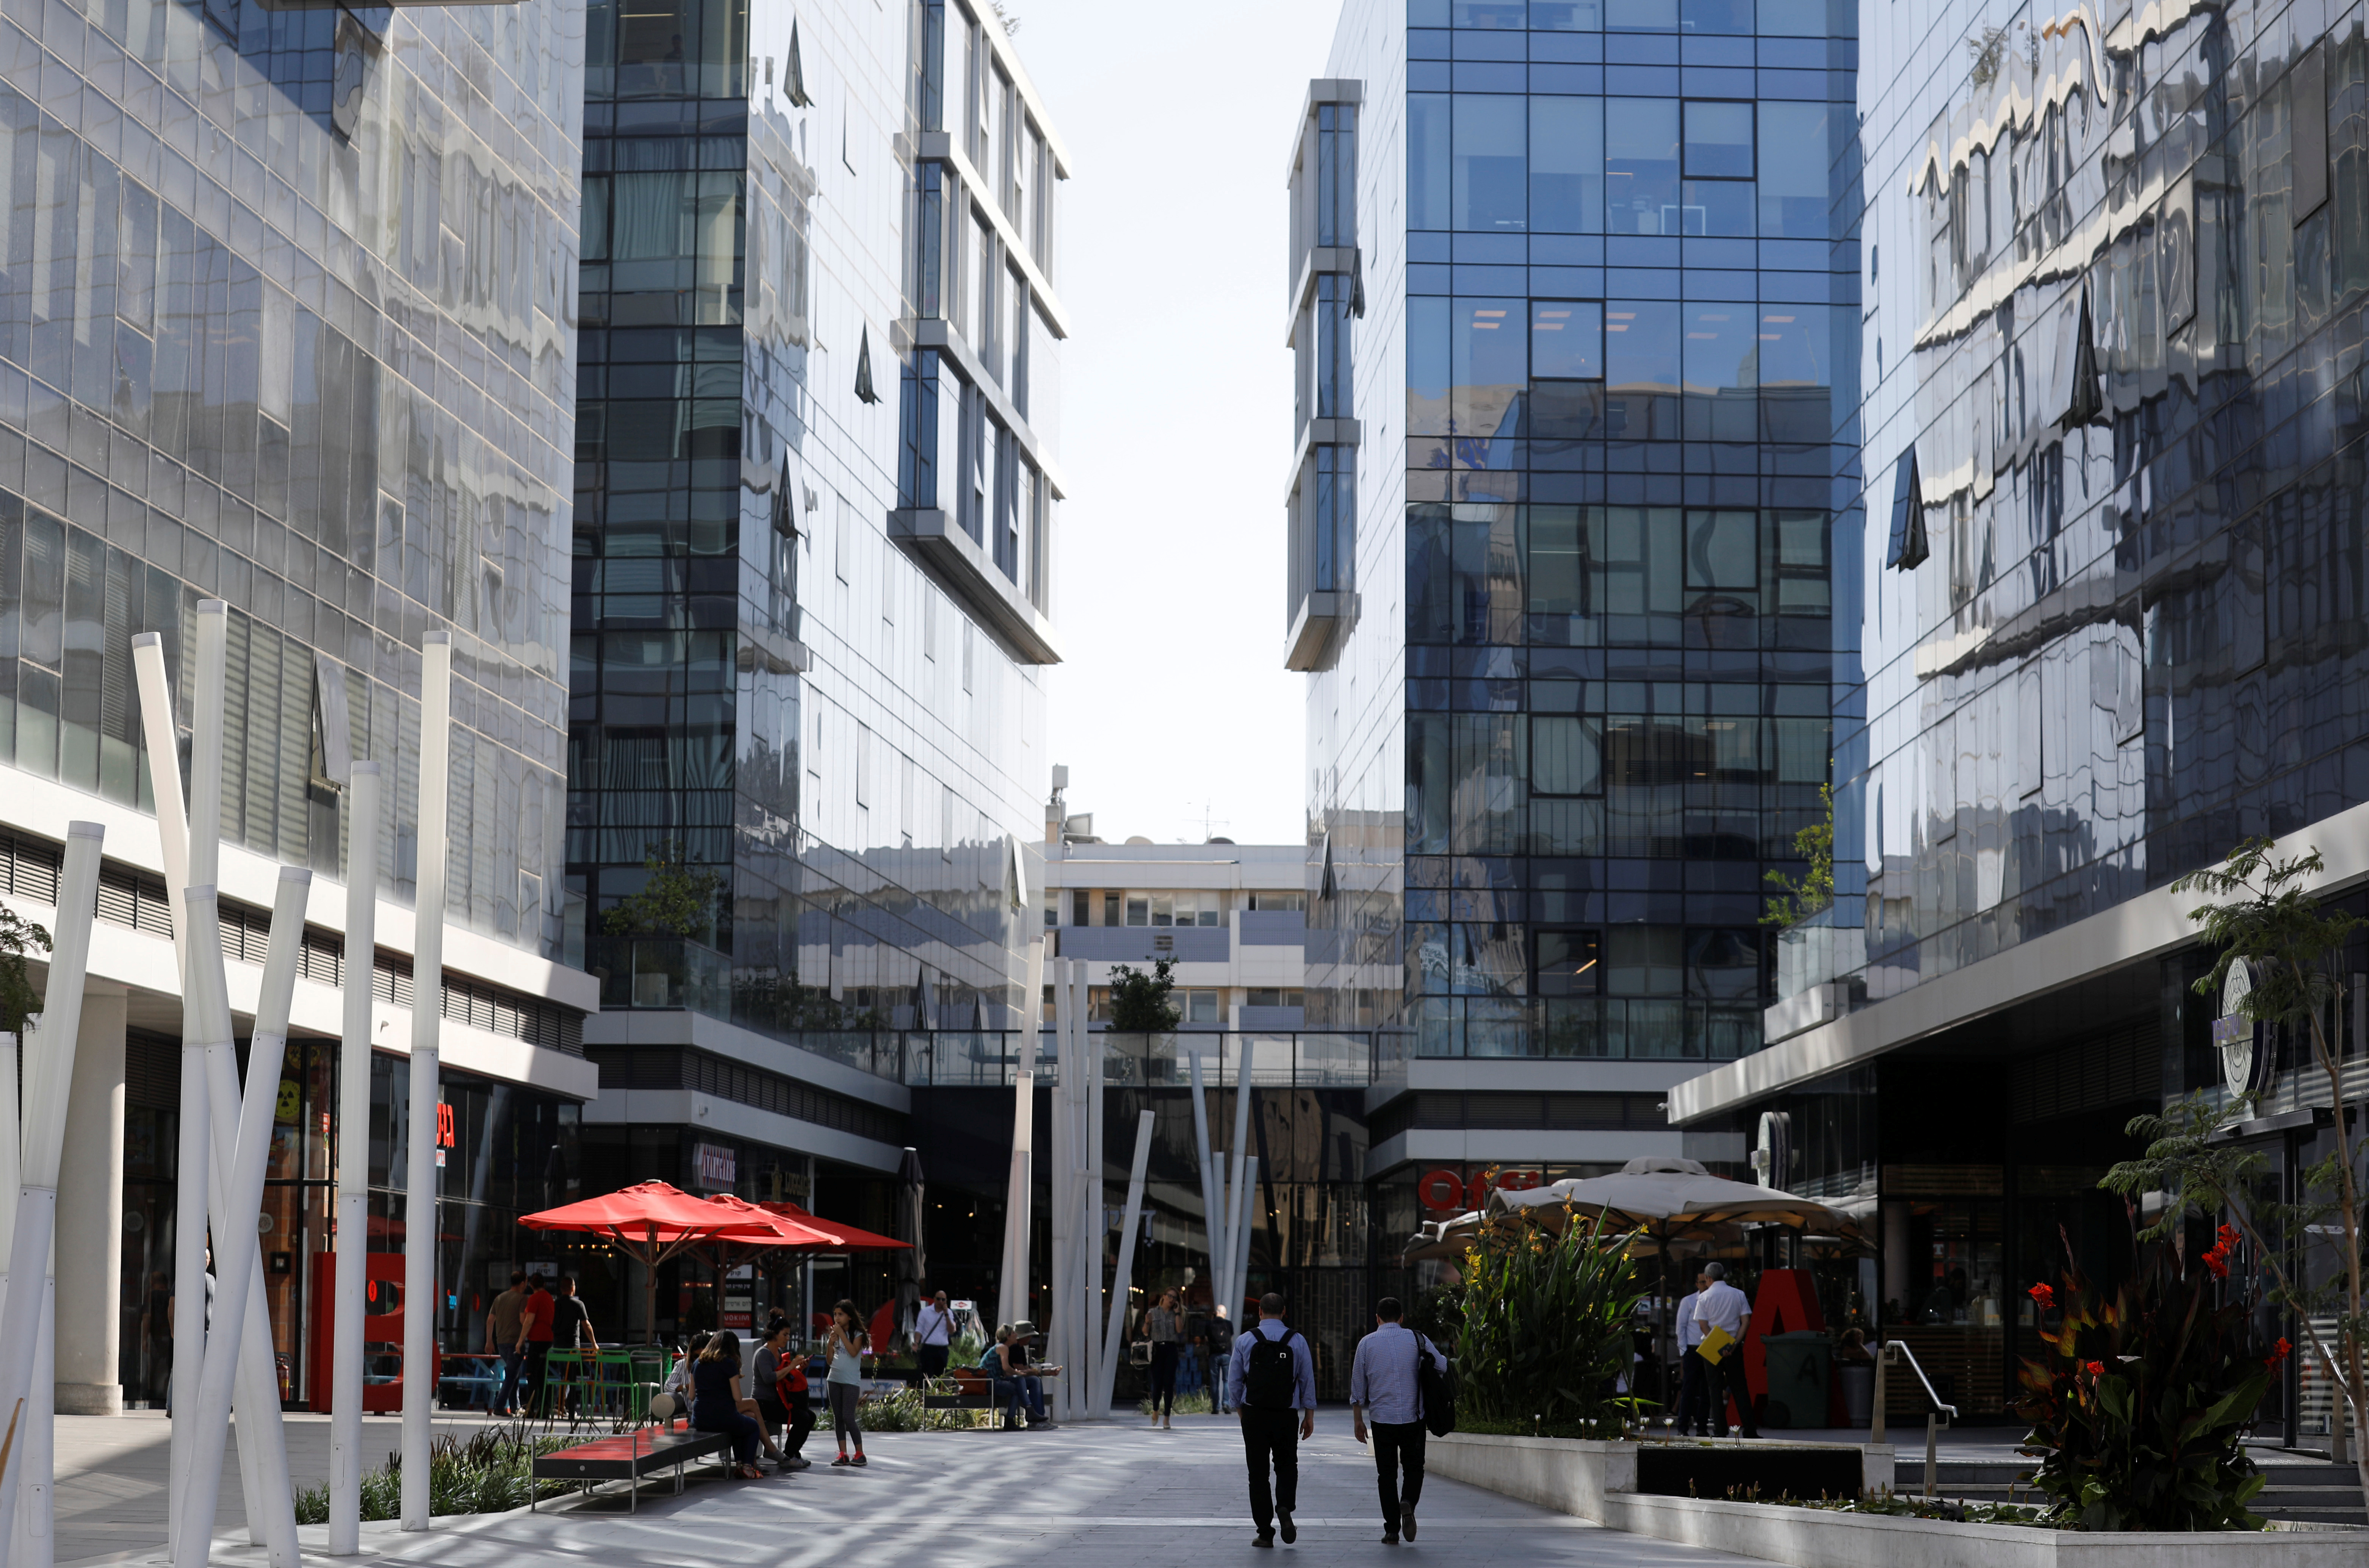 Men walk near high-rise buildings in the high-tech business area of Tel Aviv